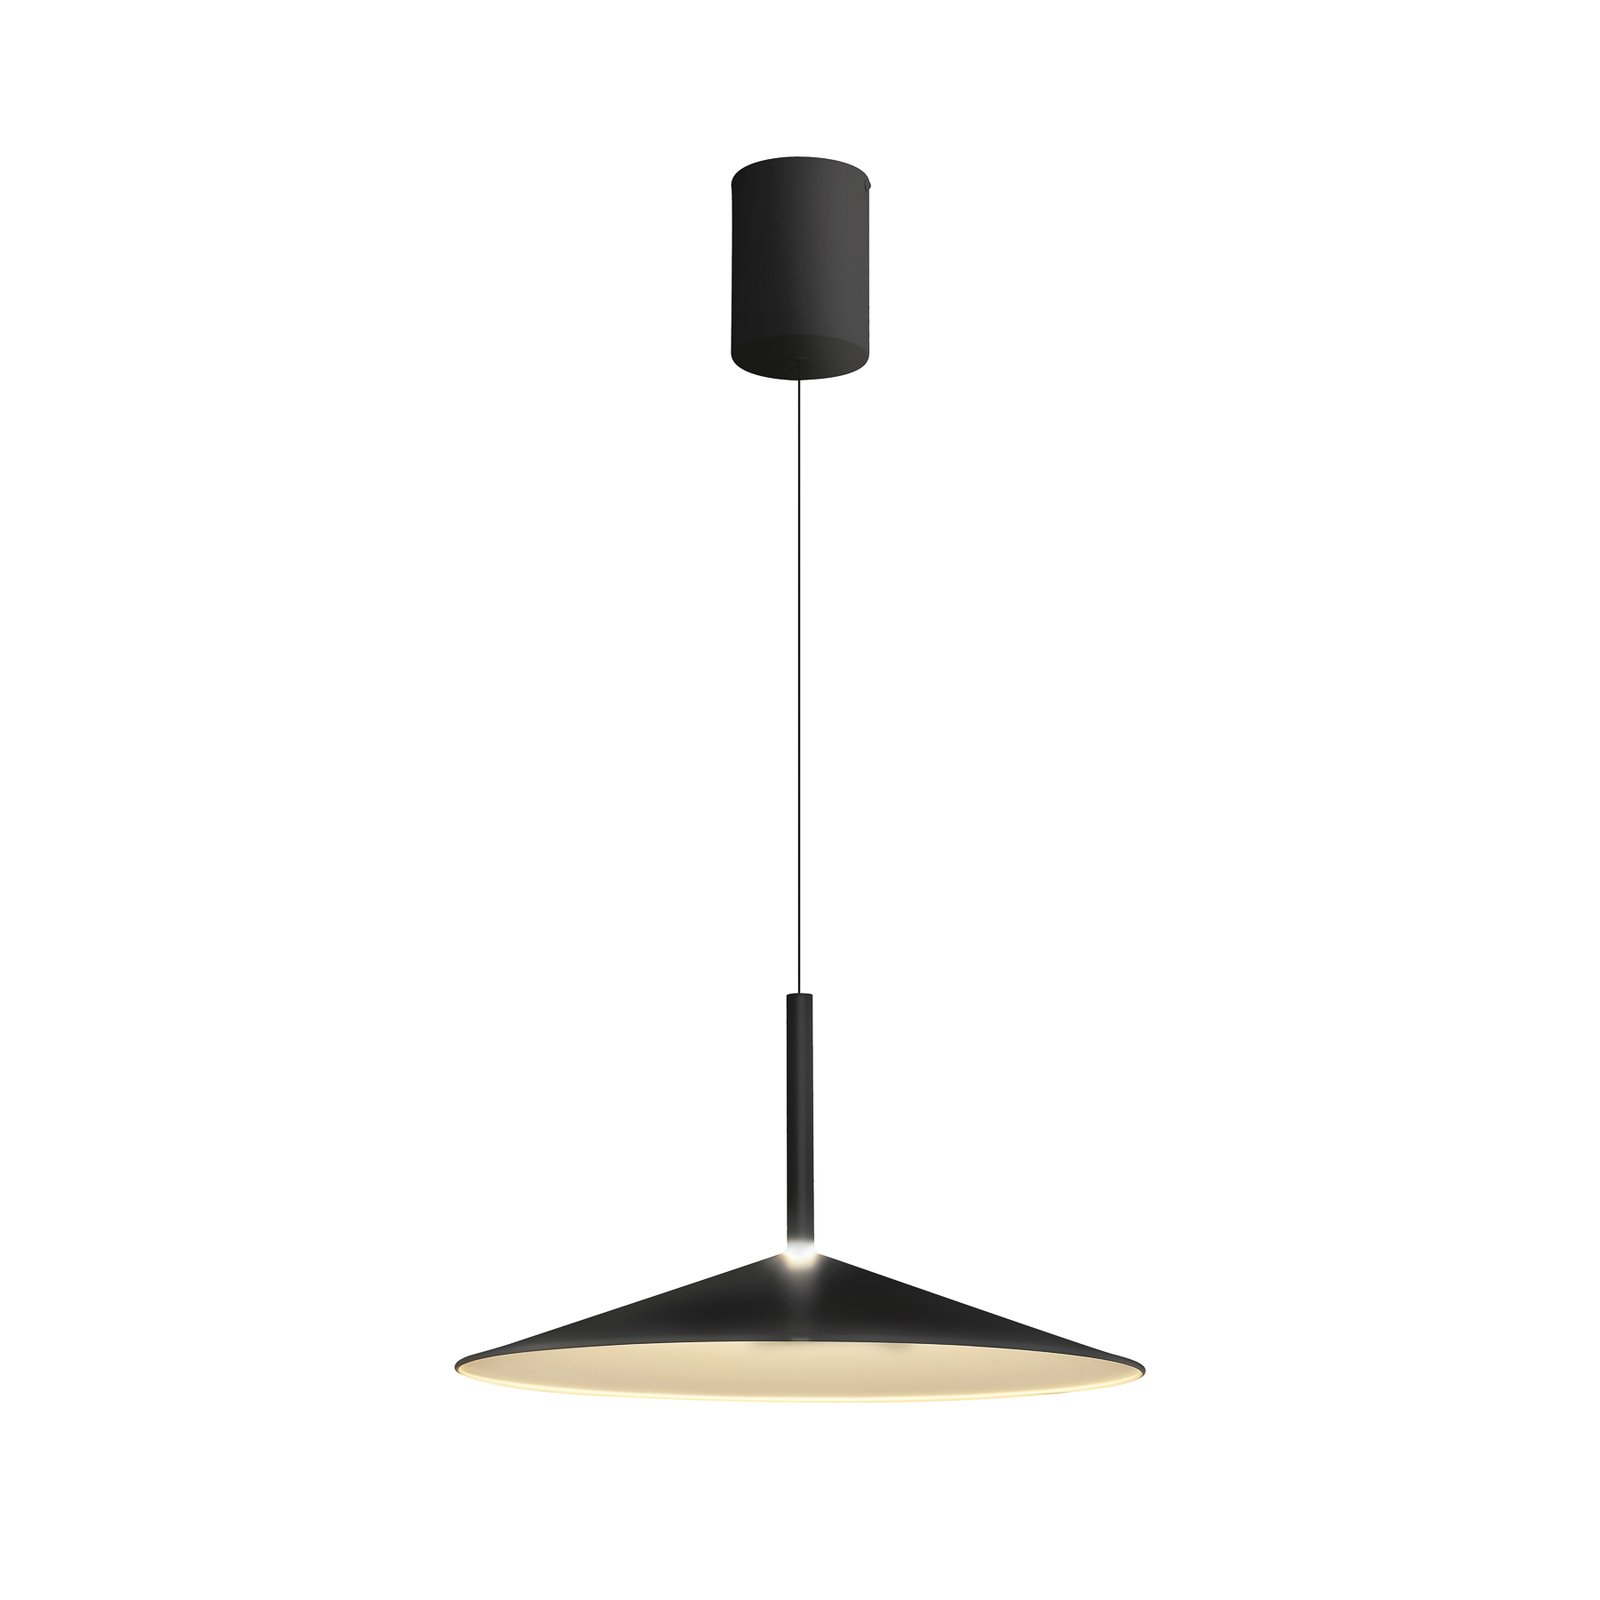 Calice hänglampa LED, svart, Ø 47,5 cm höjdjusterbar